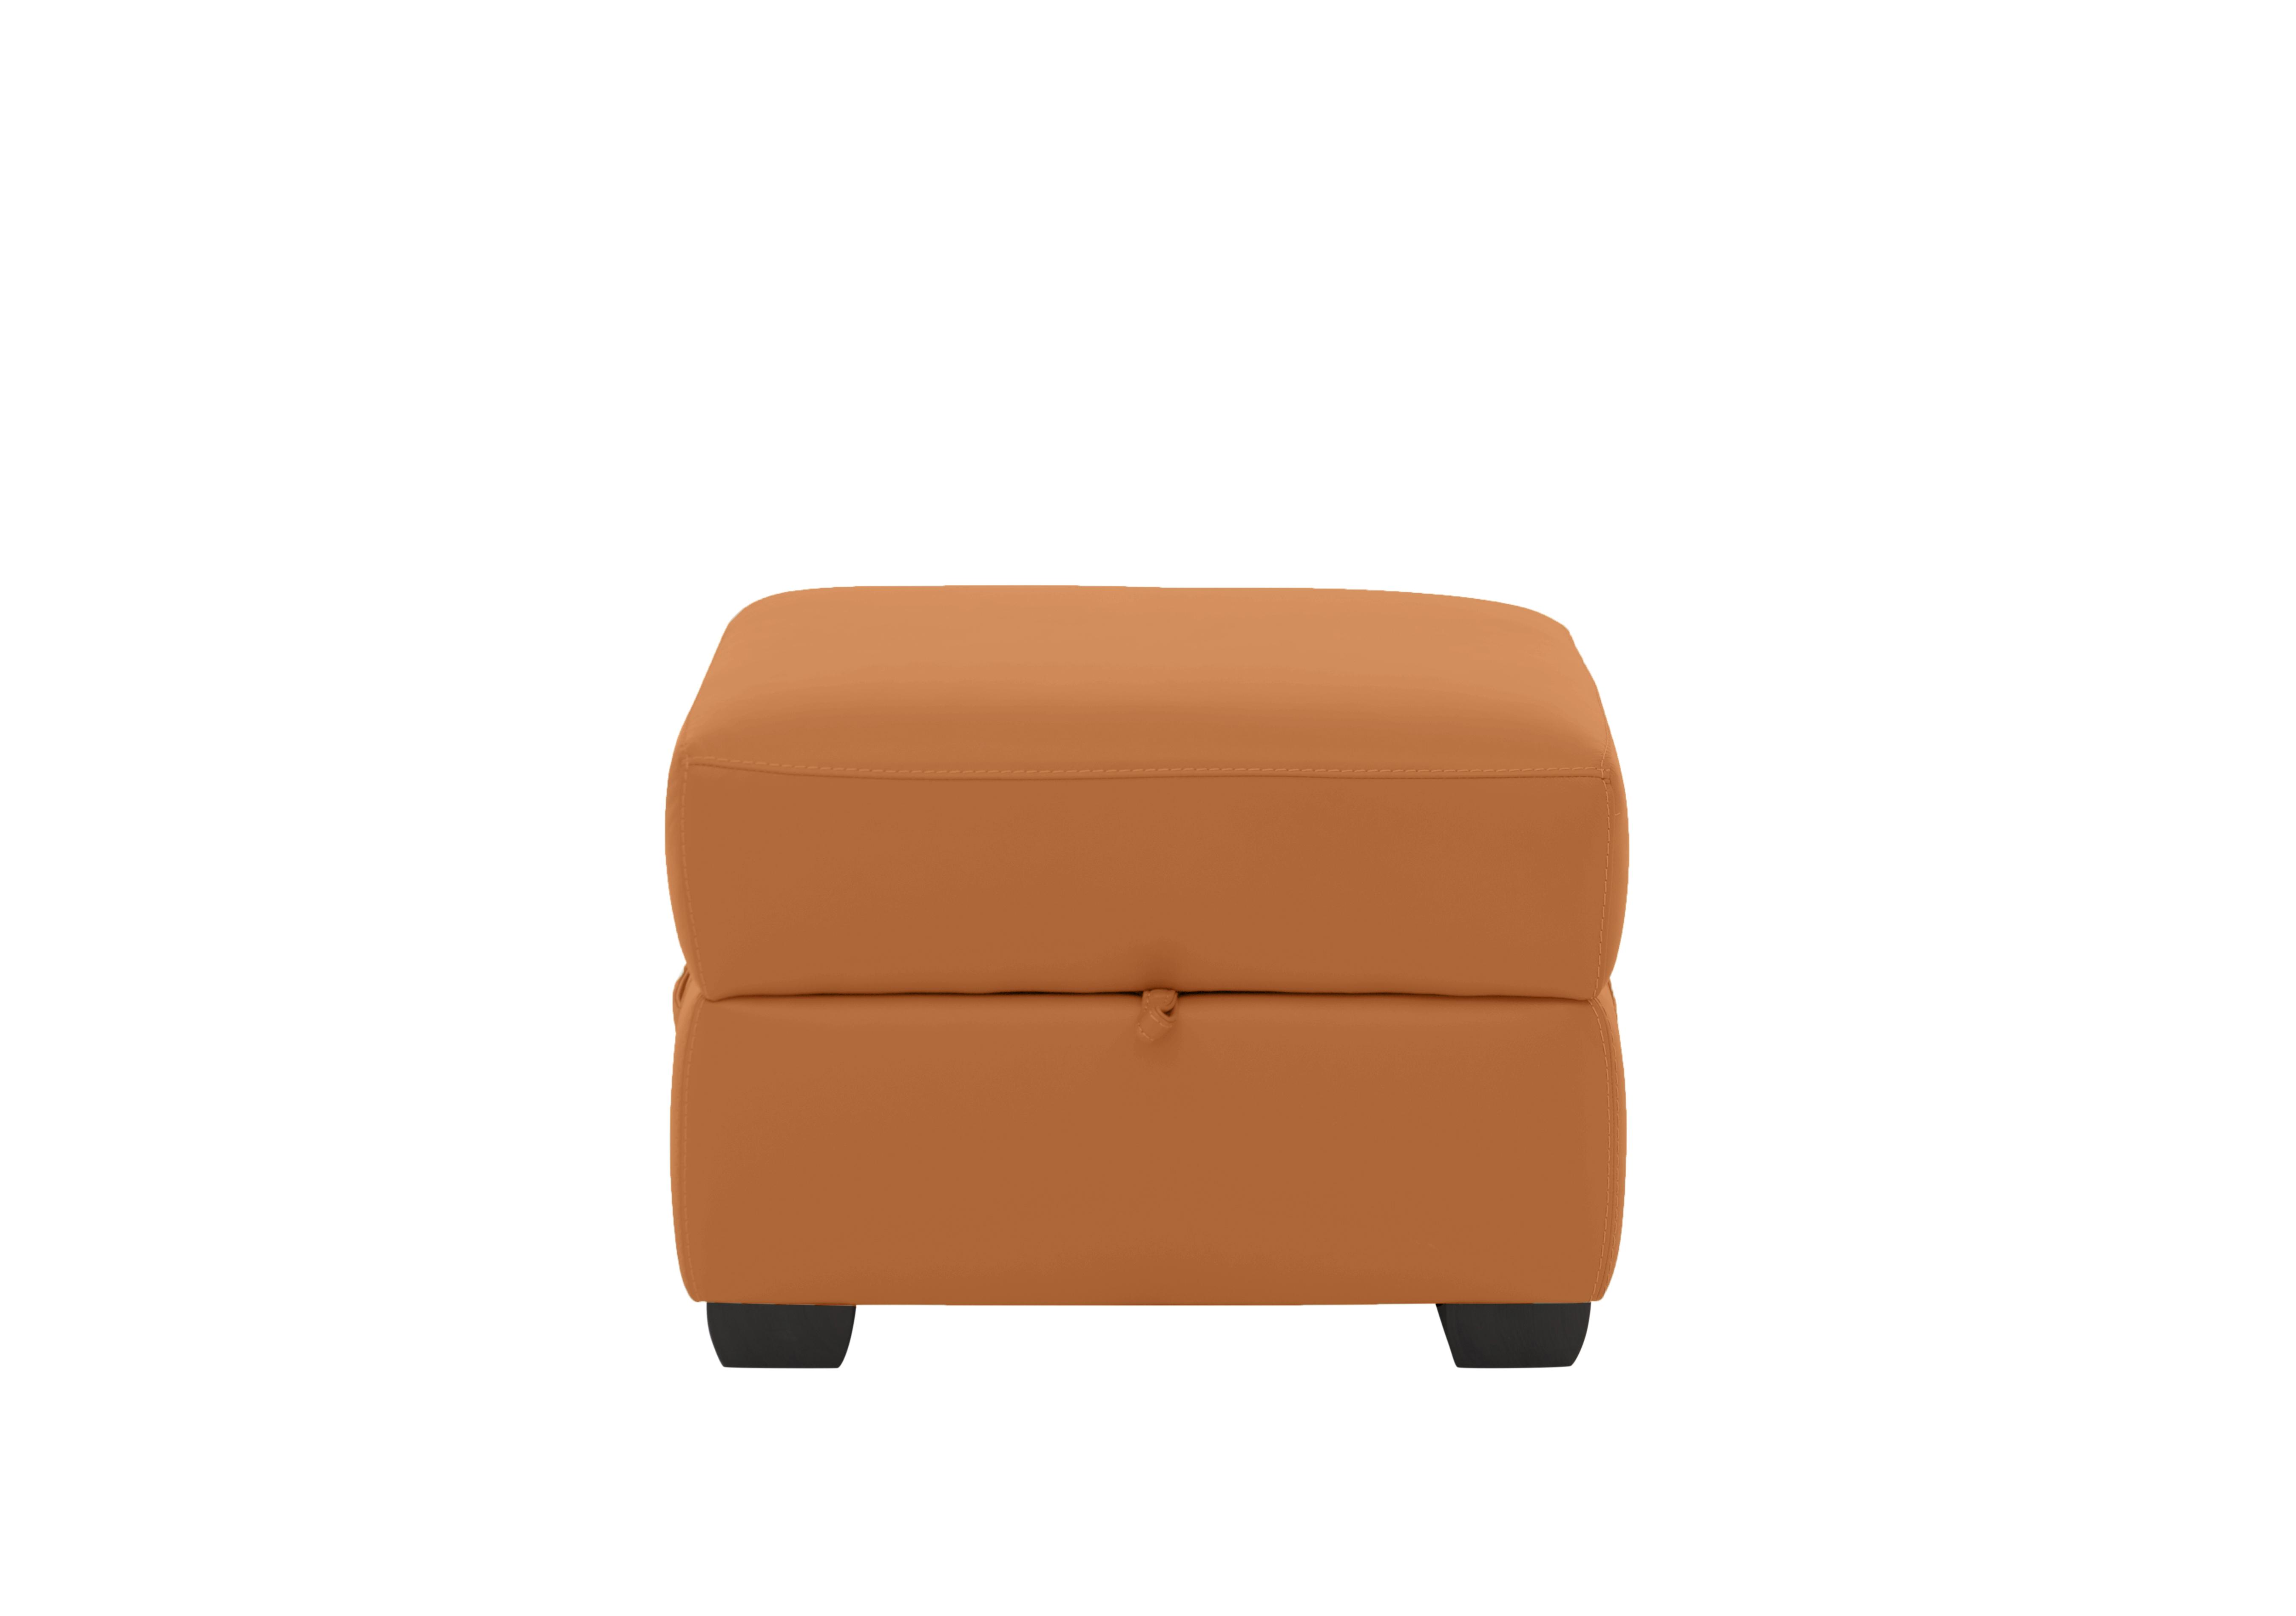 Missouri Leather Storage Footstool in Bv-335e Honey Yellow on Furniture Village